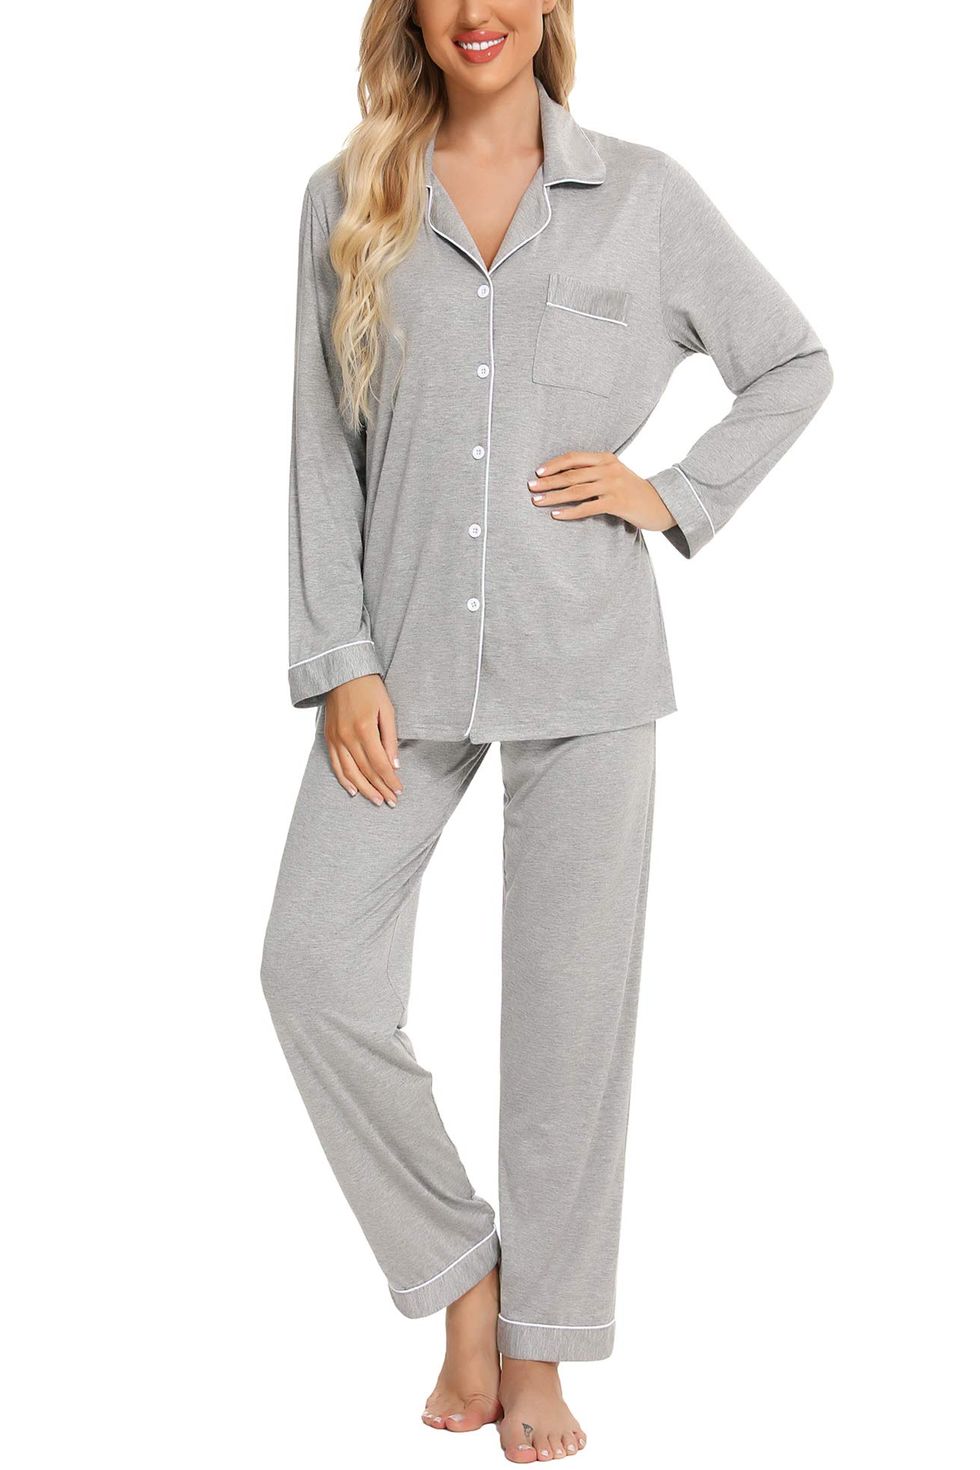 Cotton Women Pyjamas - Buy Cotton Women Pyjamas Online Starting at